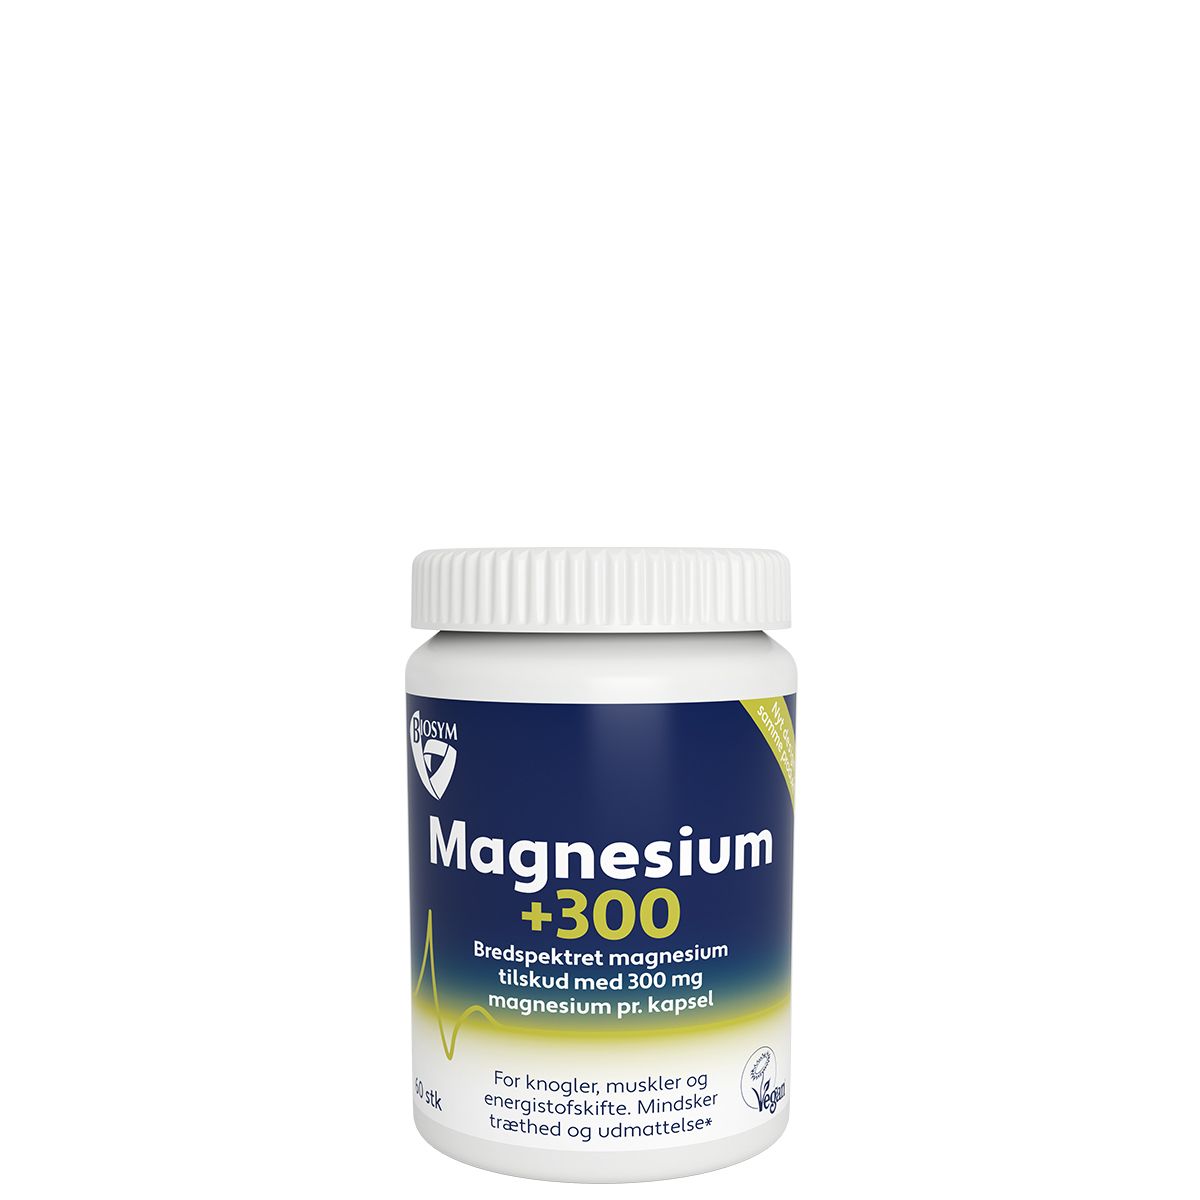 Biosym Magnesium +300 - hos Med24.dk